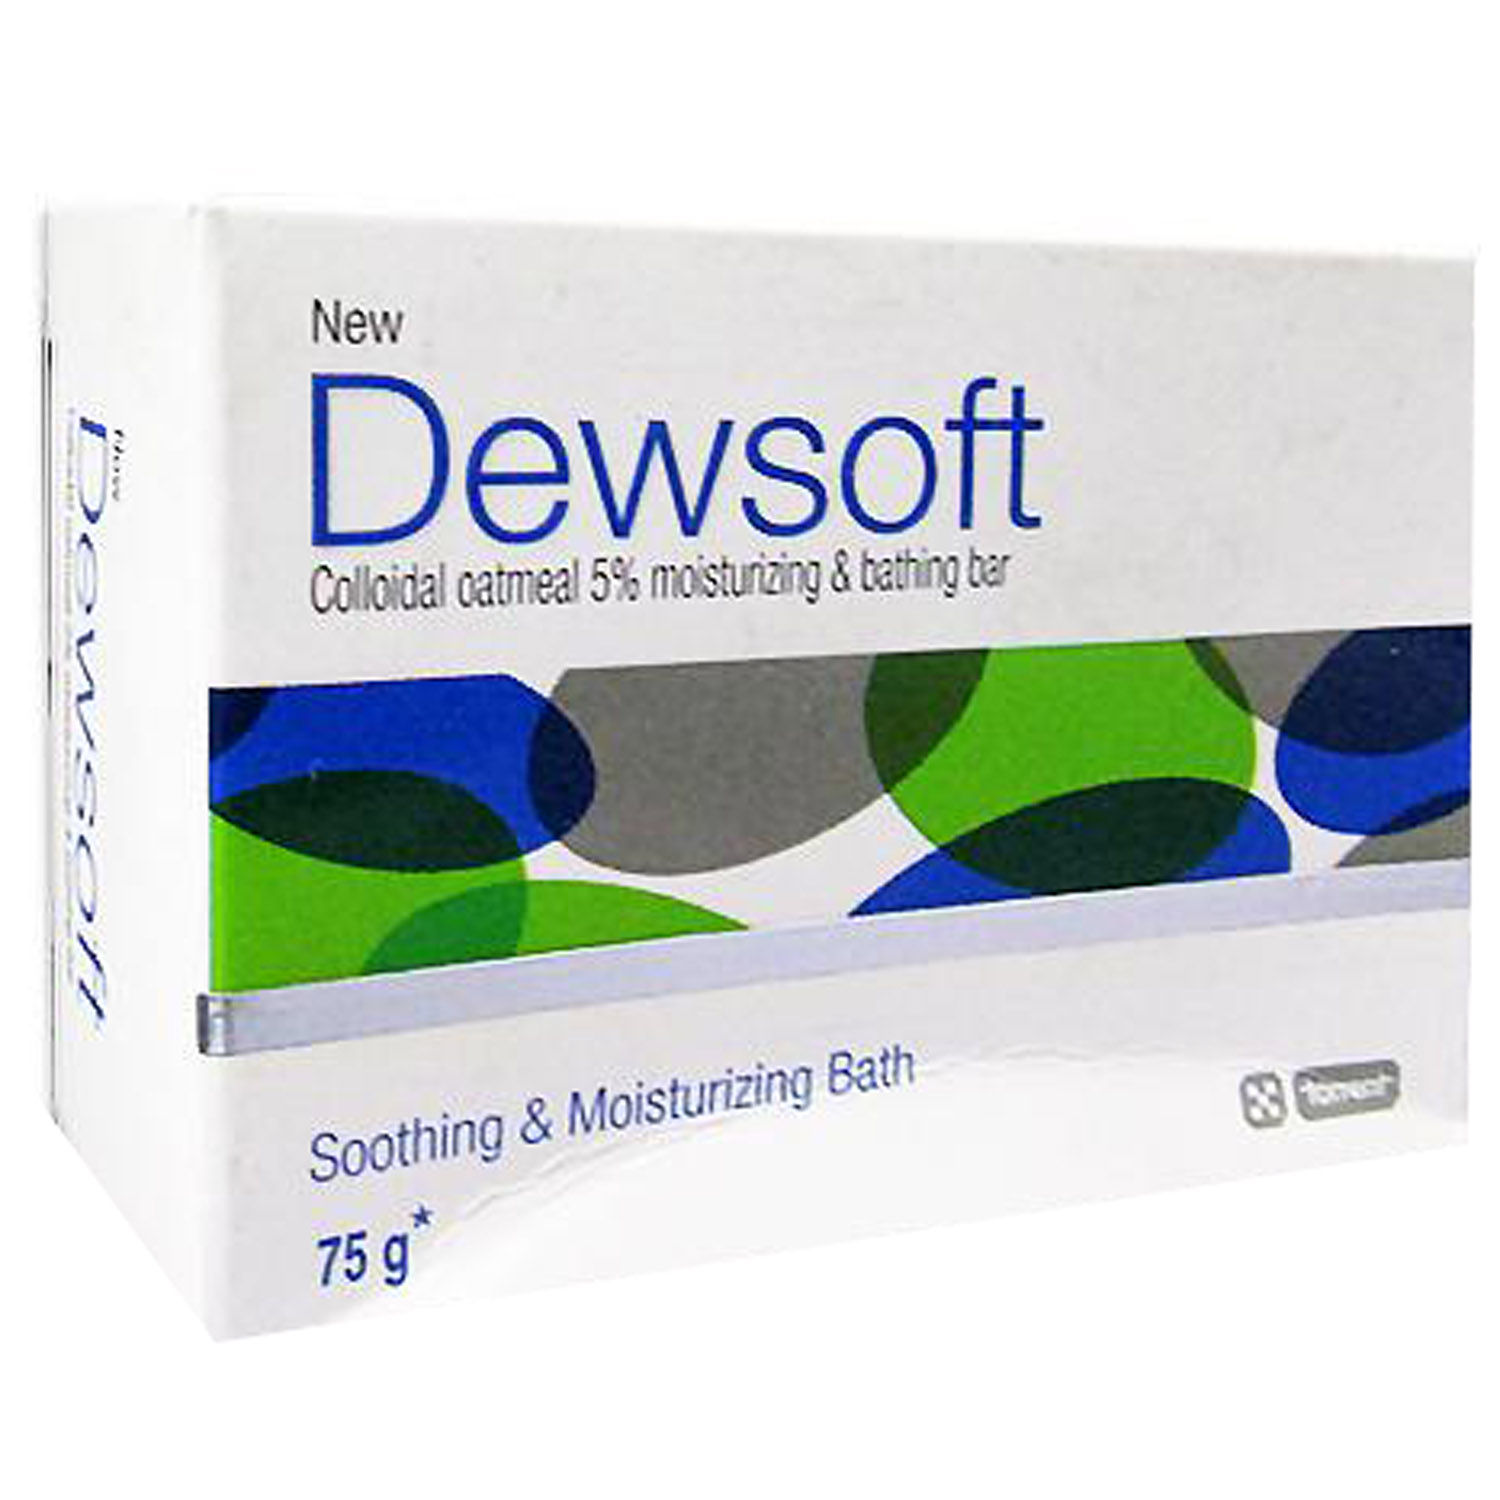 New Dewsoft Soap, 75 gm, Pack of 1 